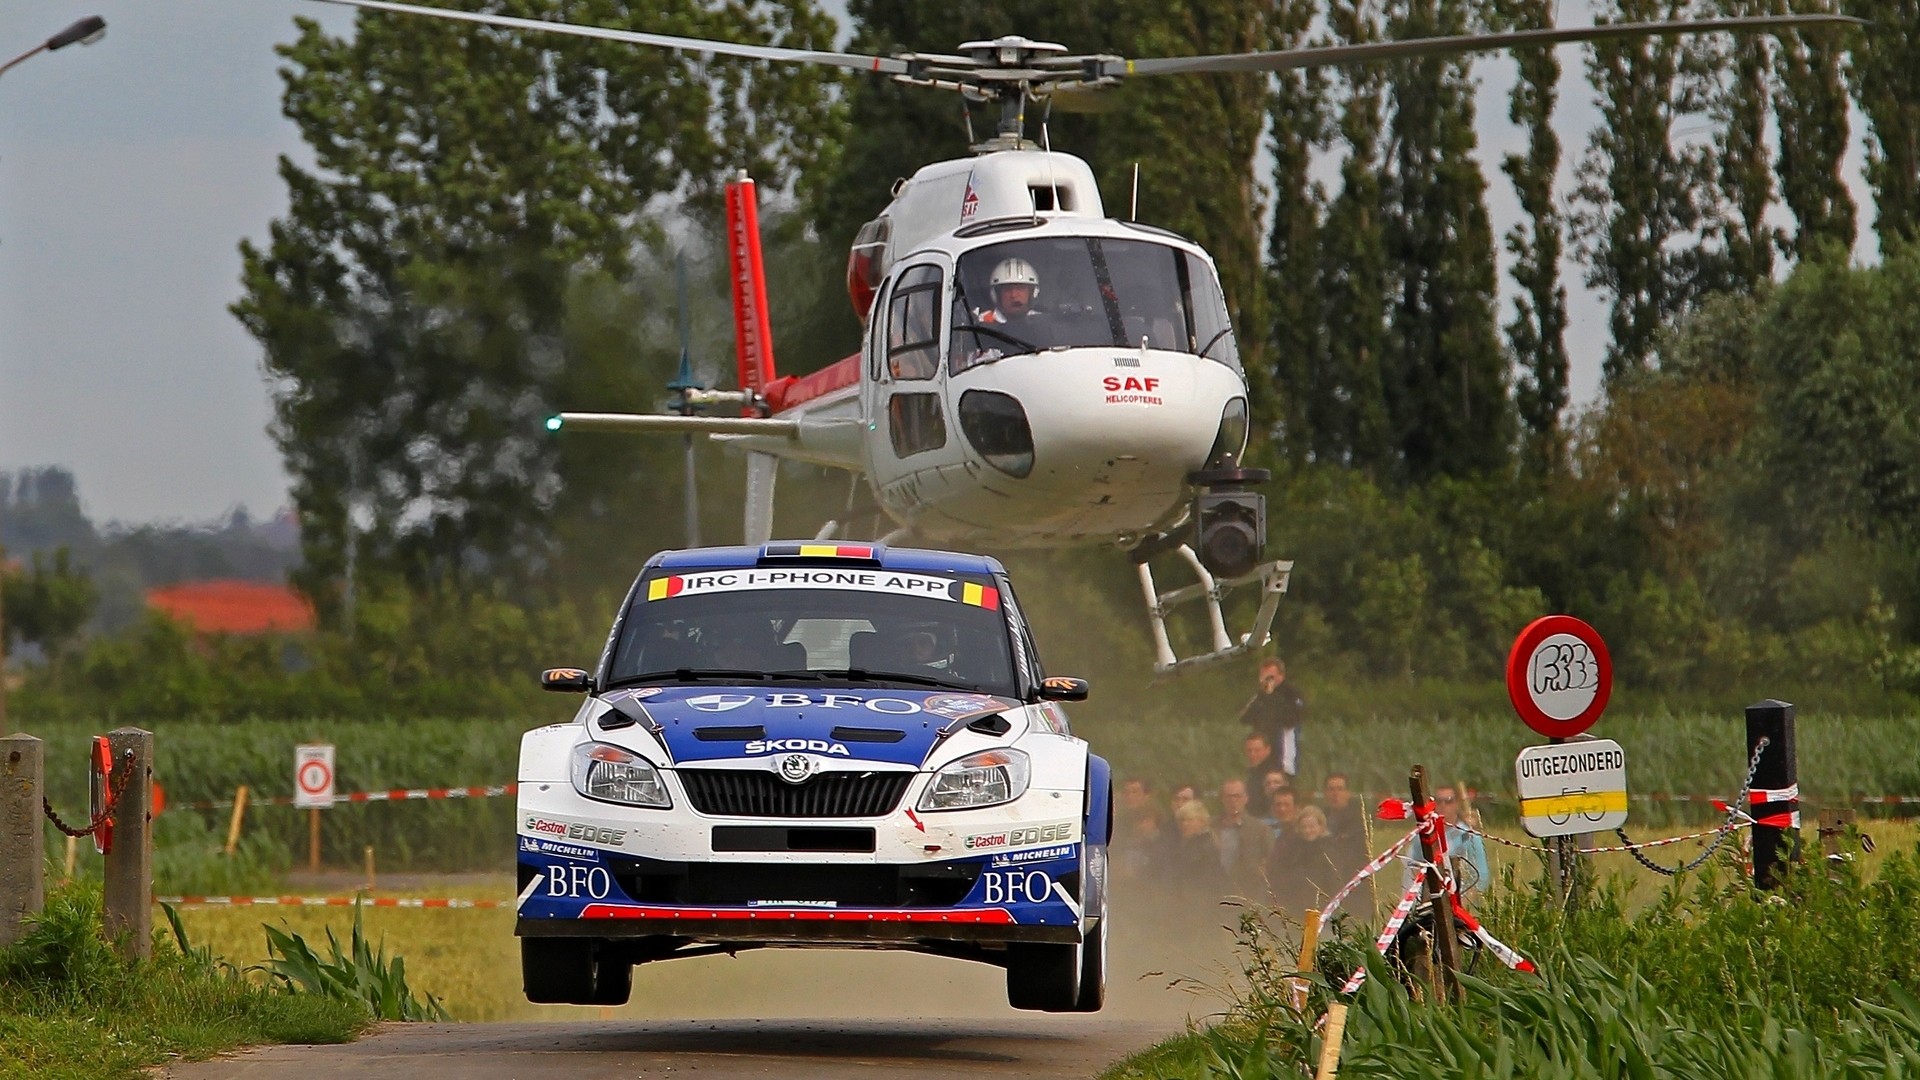 1920x1080 Skoda Fabia WRC racing, and helicopter: